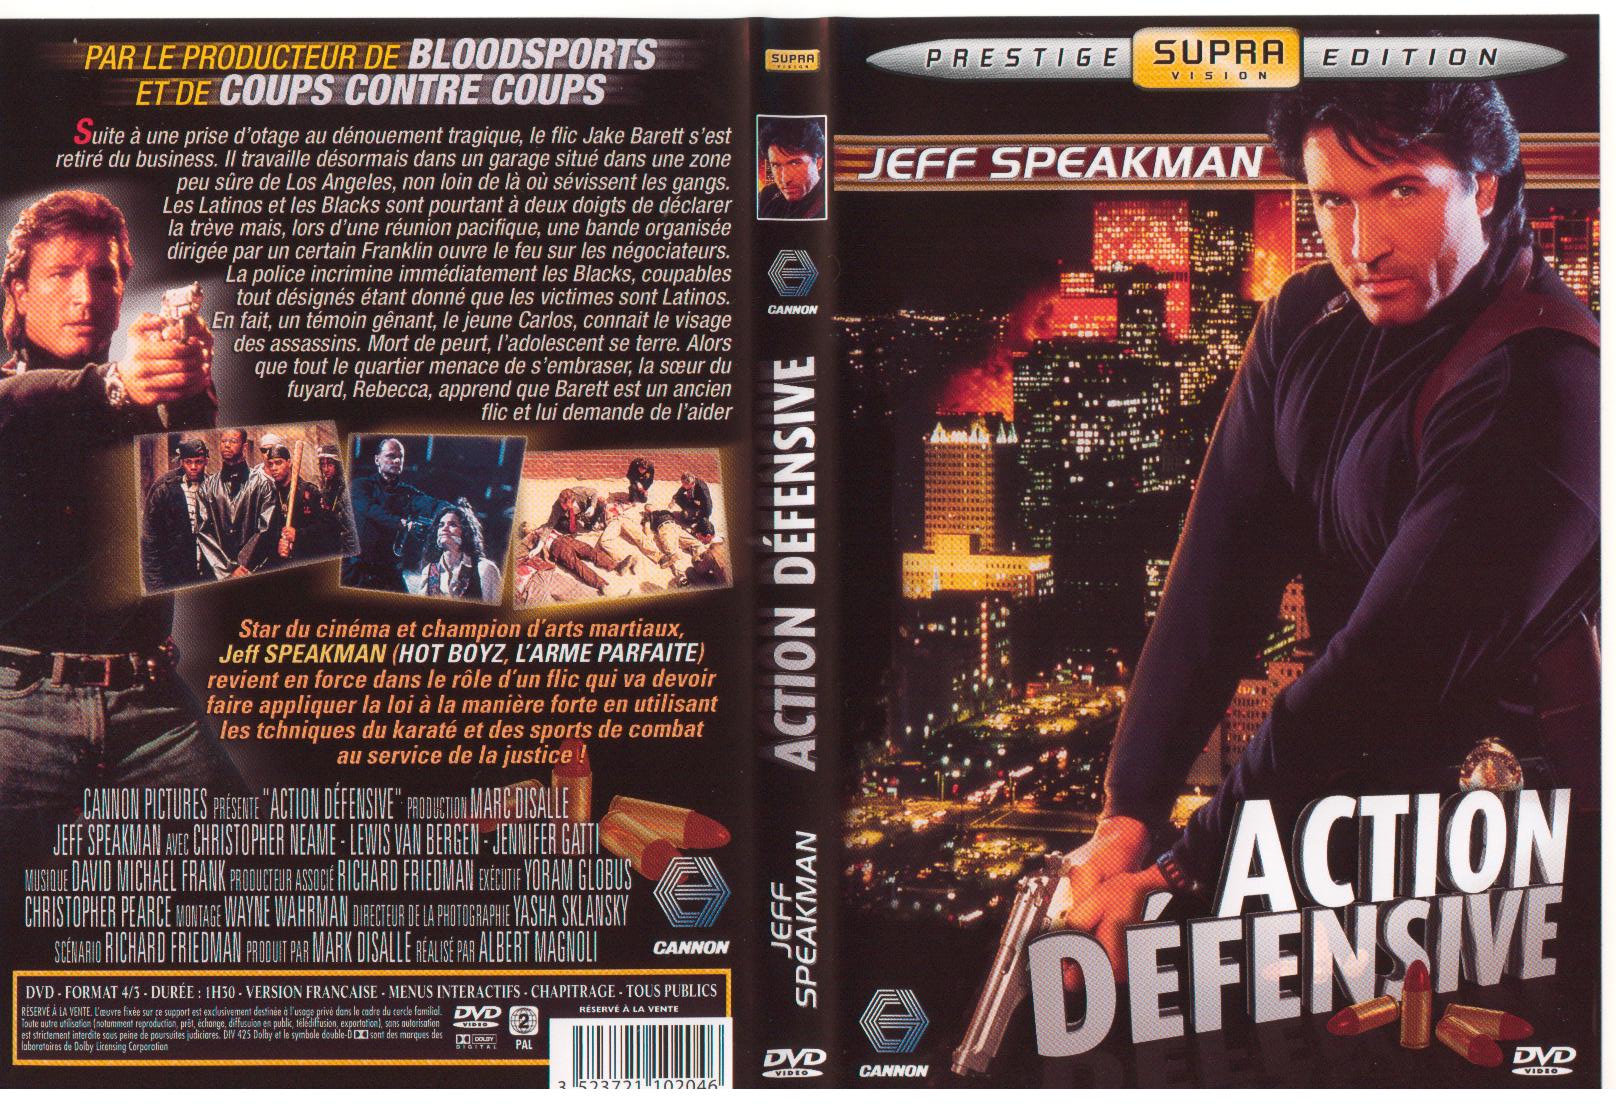 Jaquette DVD Action defensive